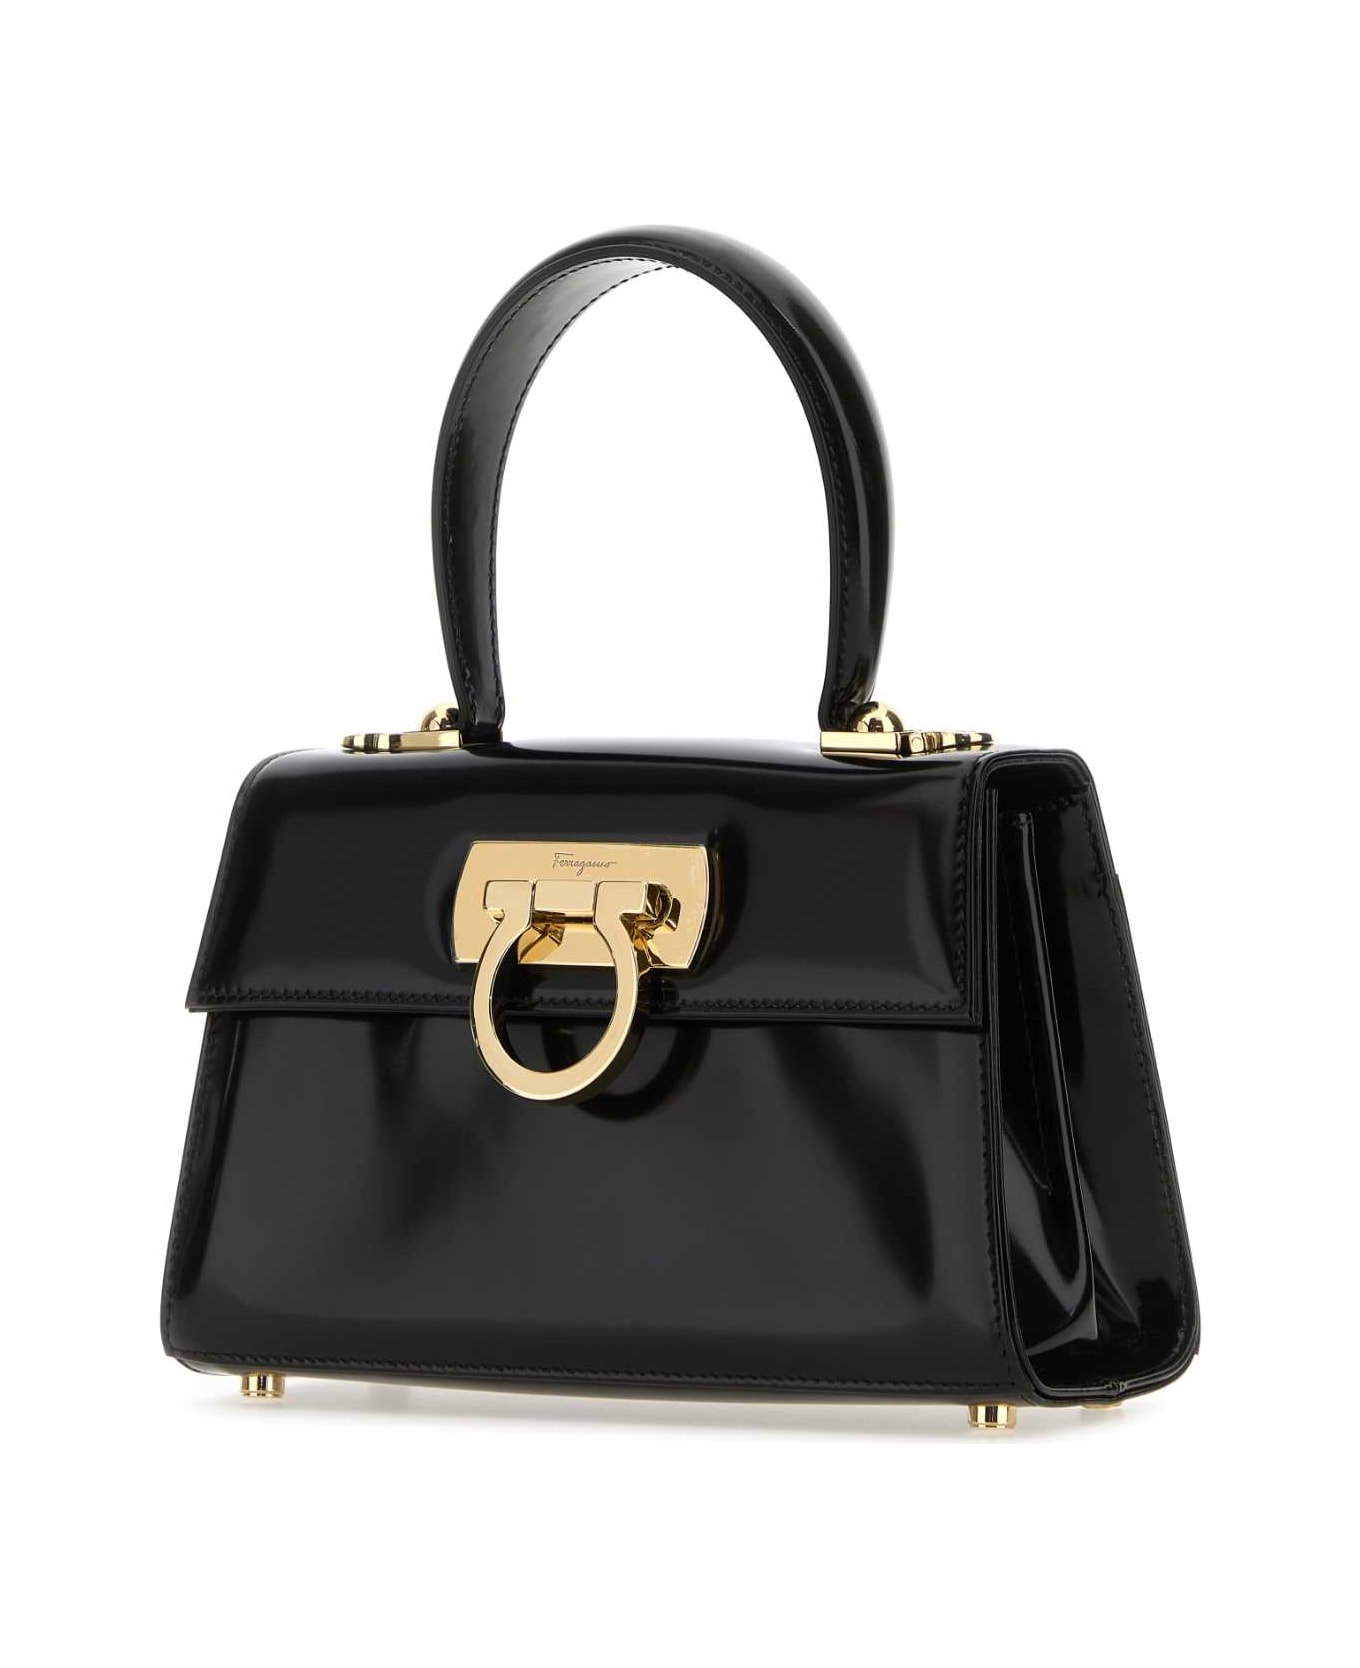 Ferragamo Black Leather Mini Iconic Handbag - NERONERONERO トートバッグ